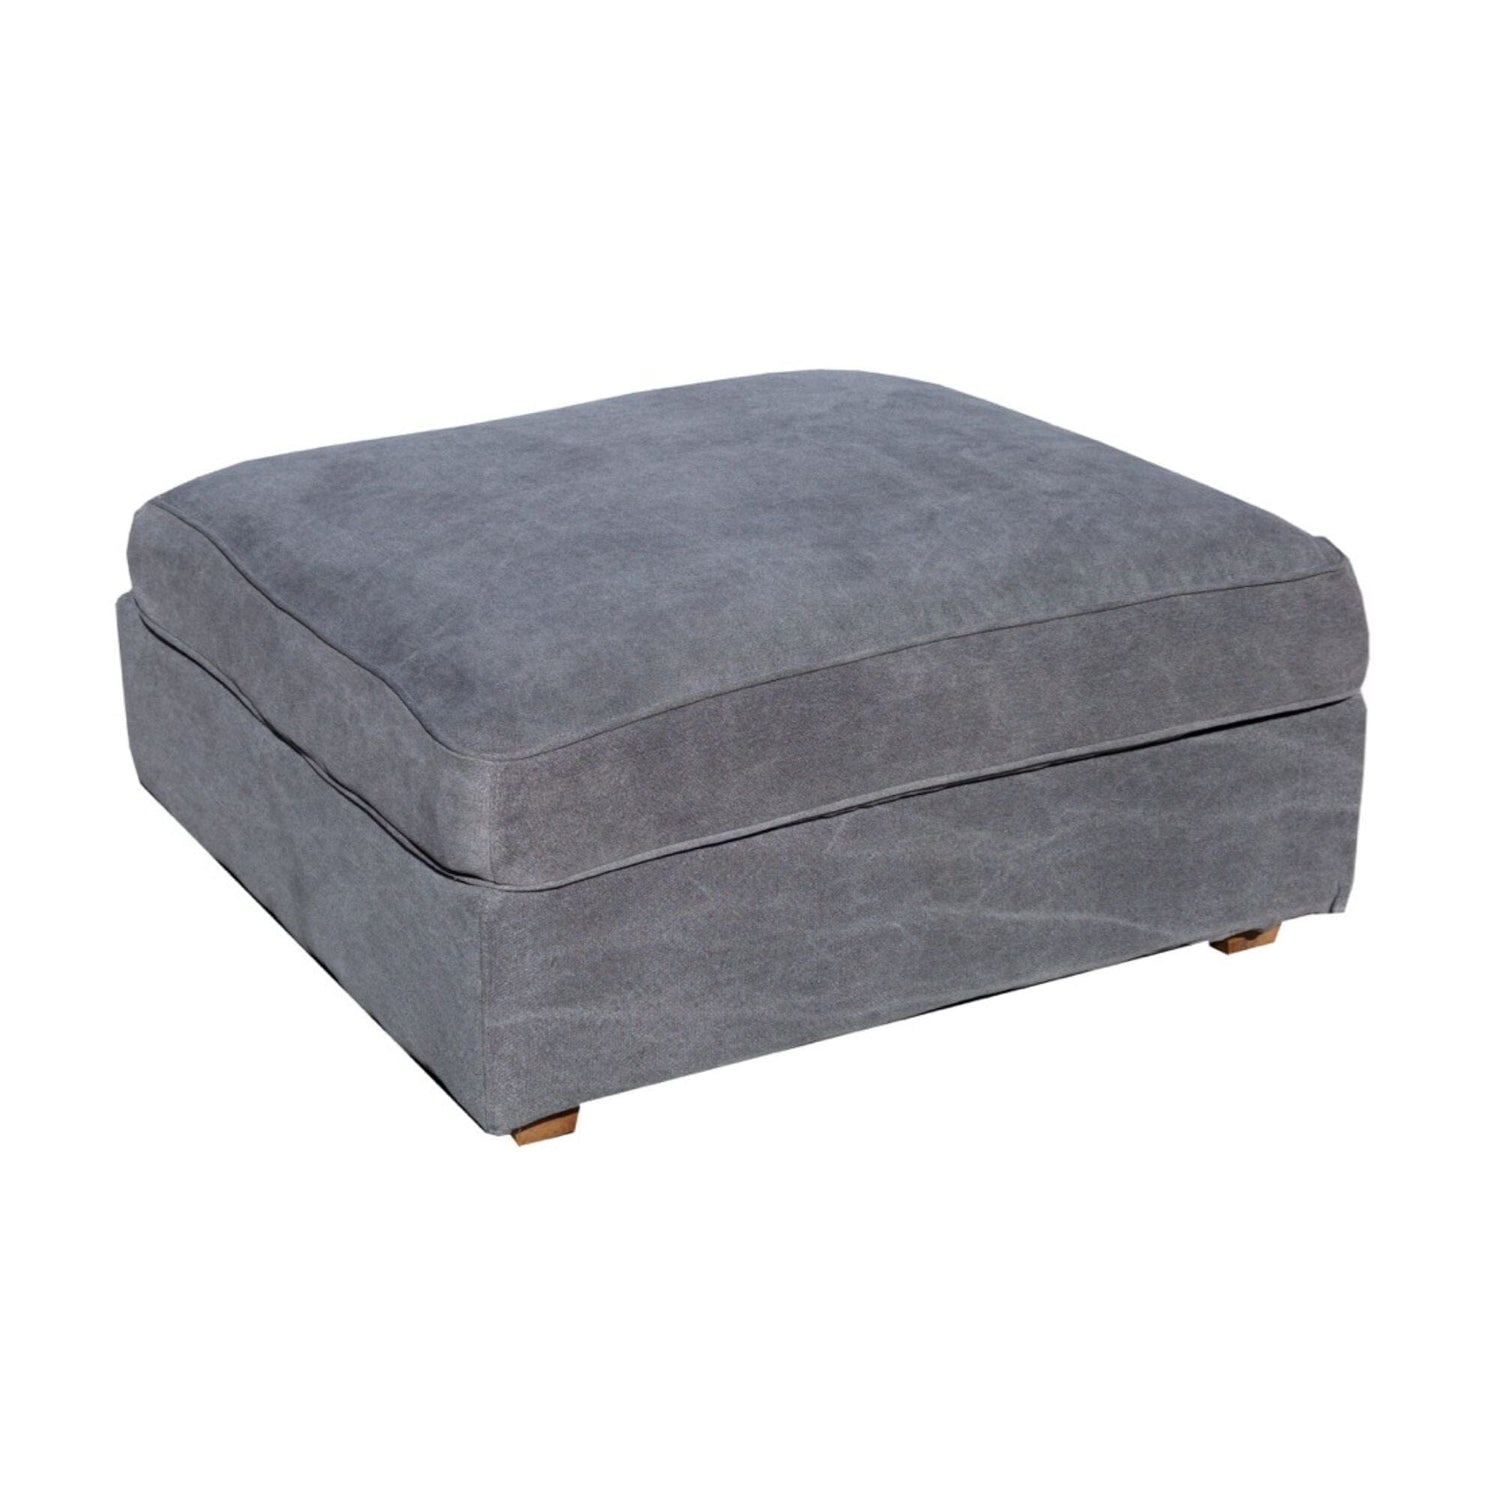 Clareville Ottoman Living Furniture Beachwood Designs Grey Linen 